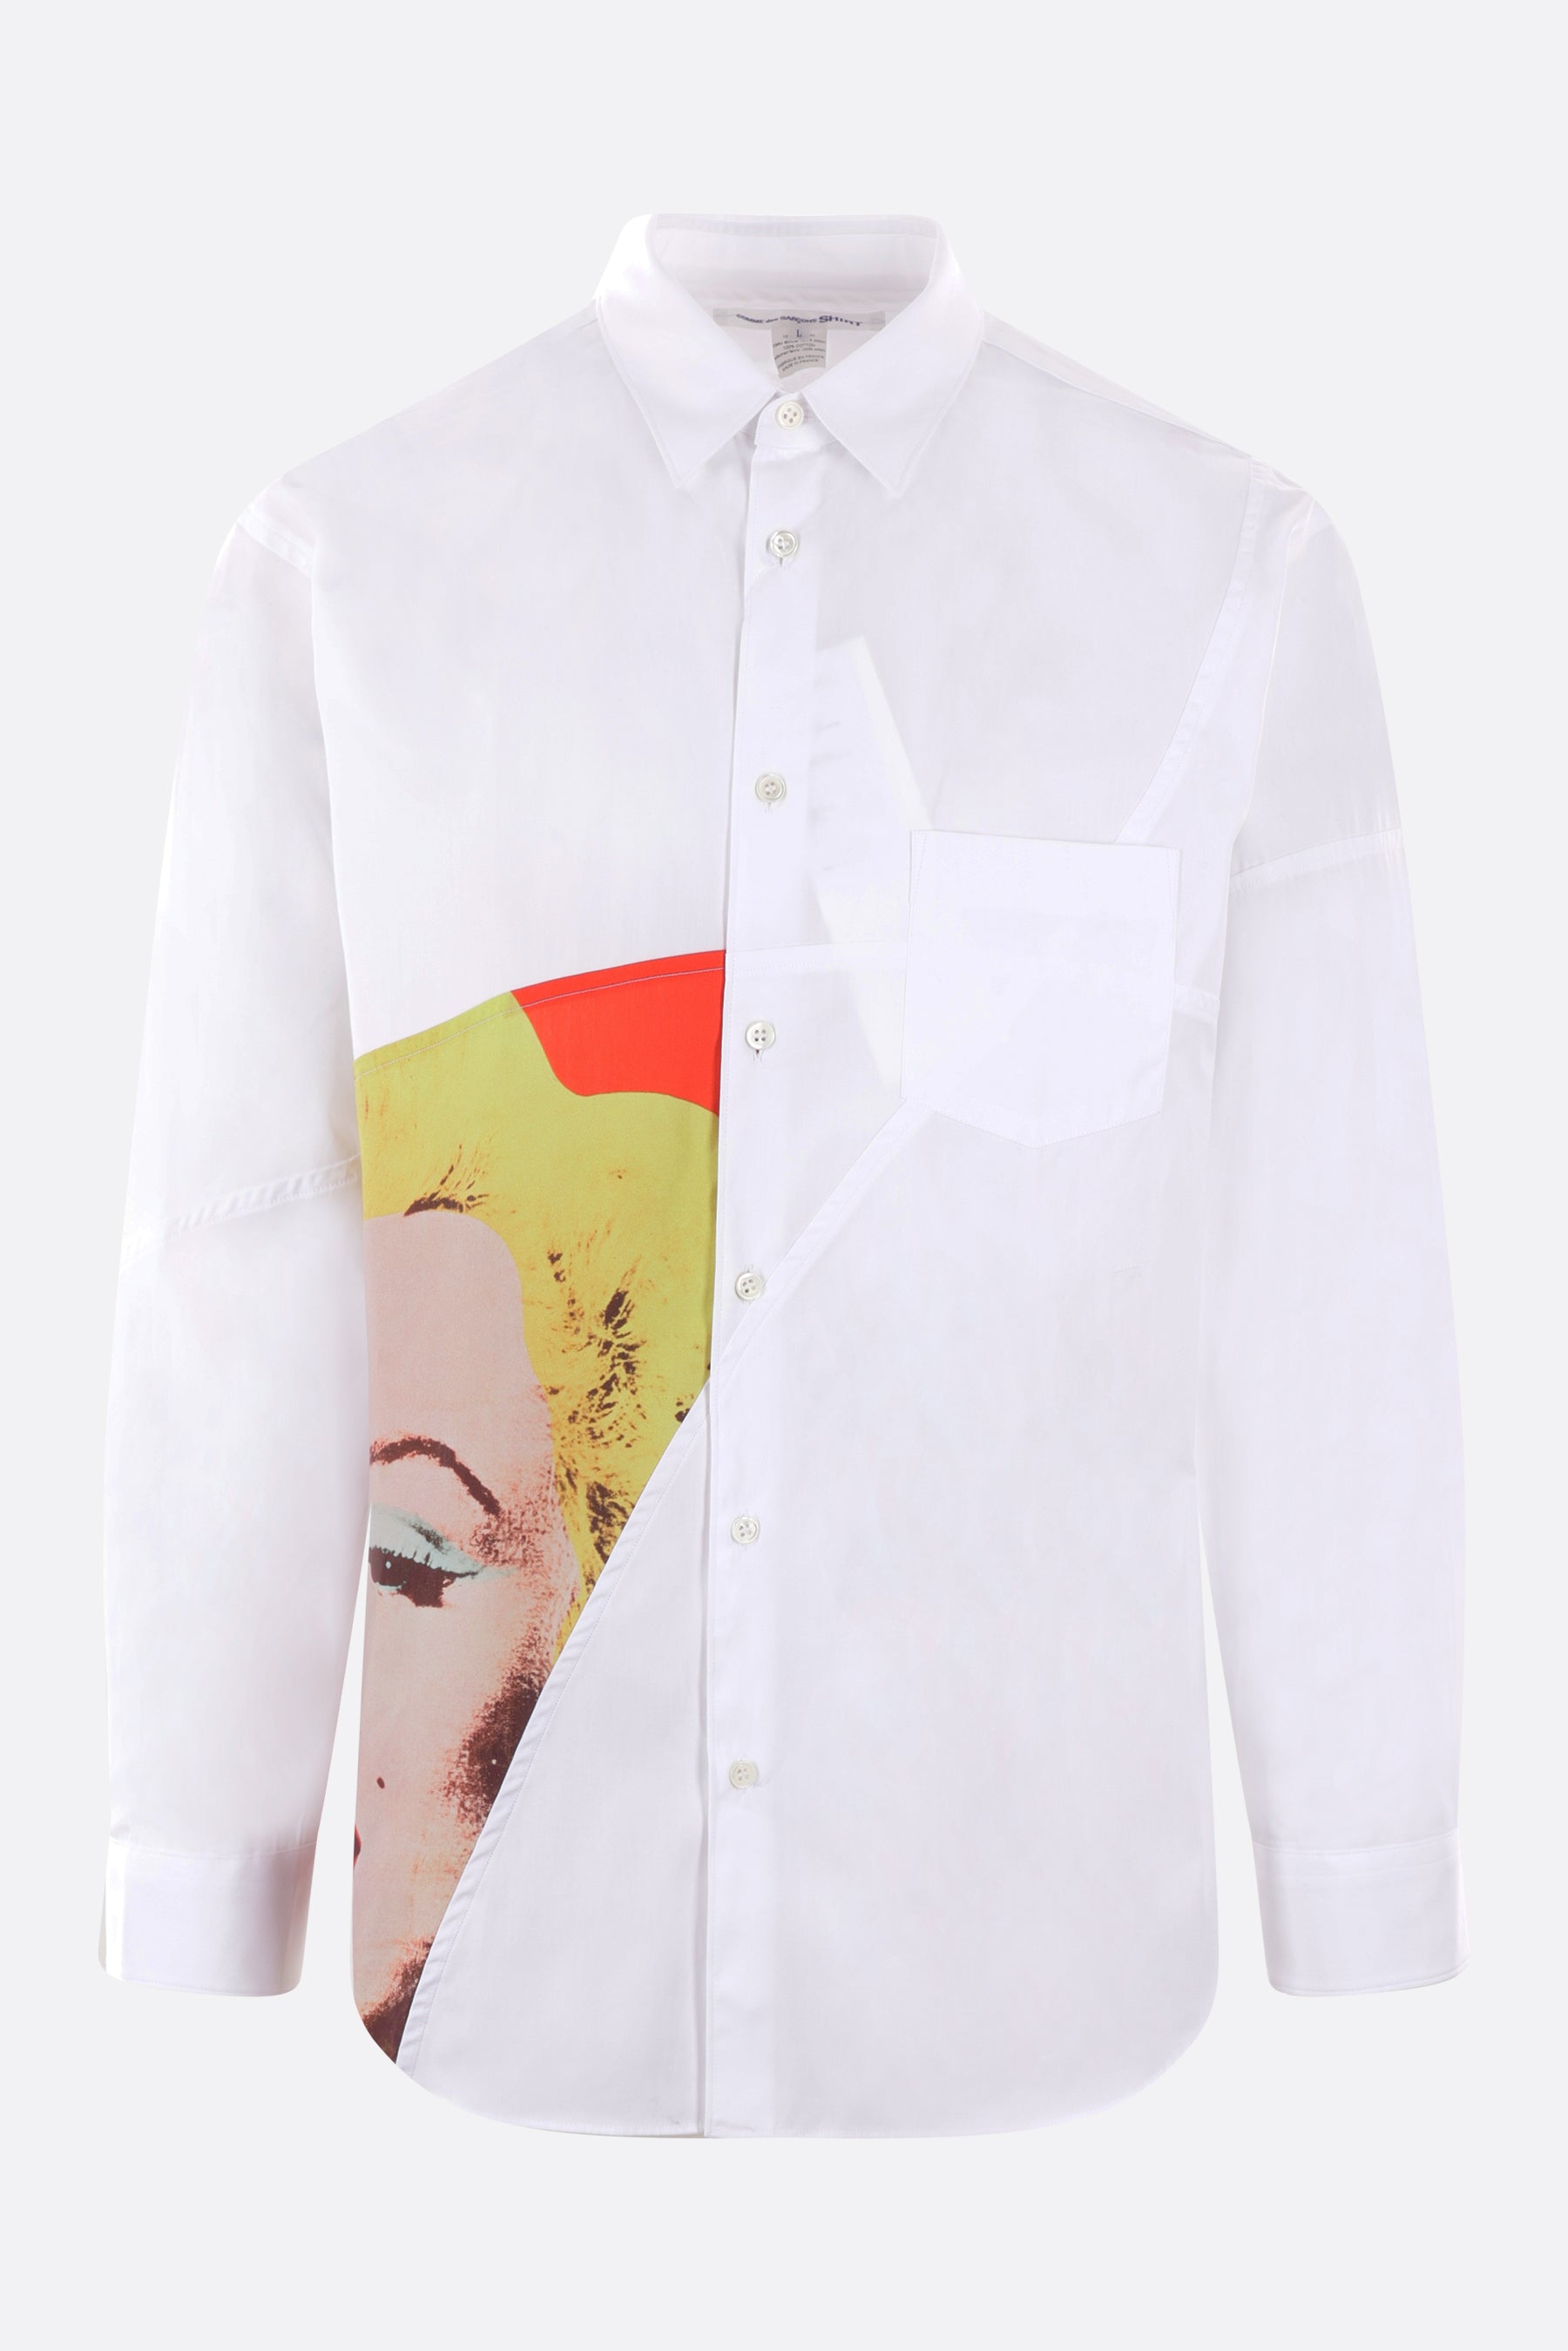 Andy Warhol - Marilyn Monroe printed poplin shirt